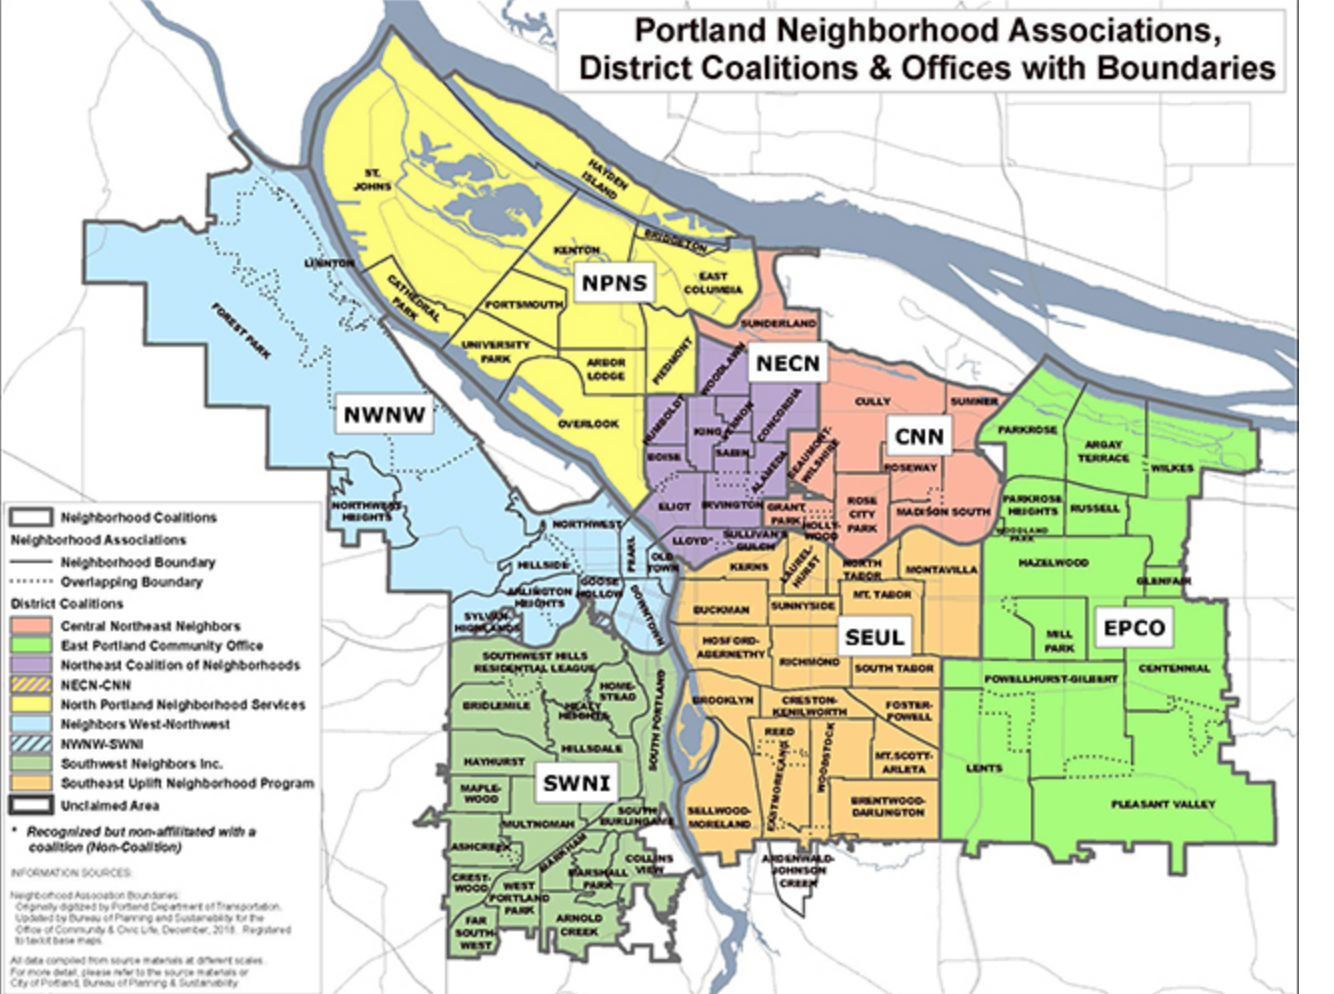 Map of Portland's Neighborhood Associations